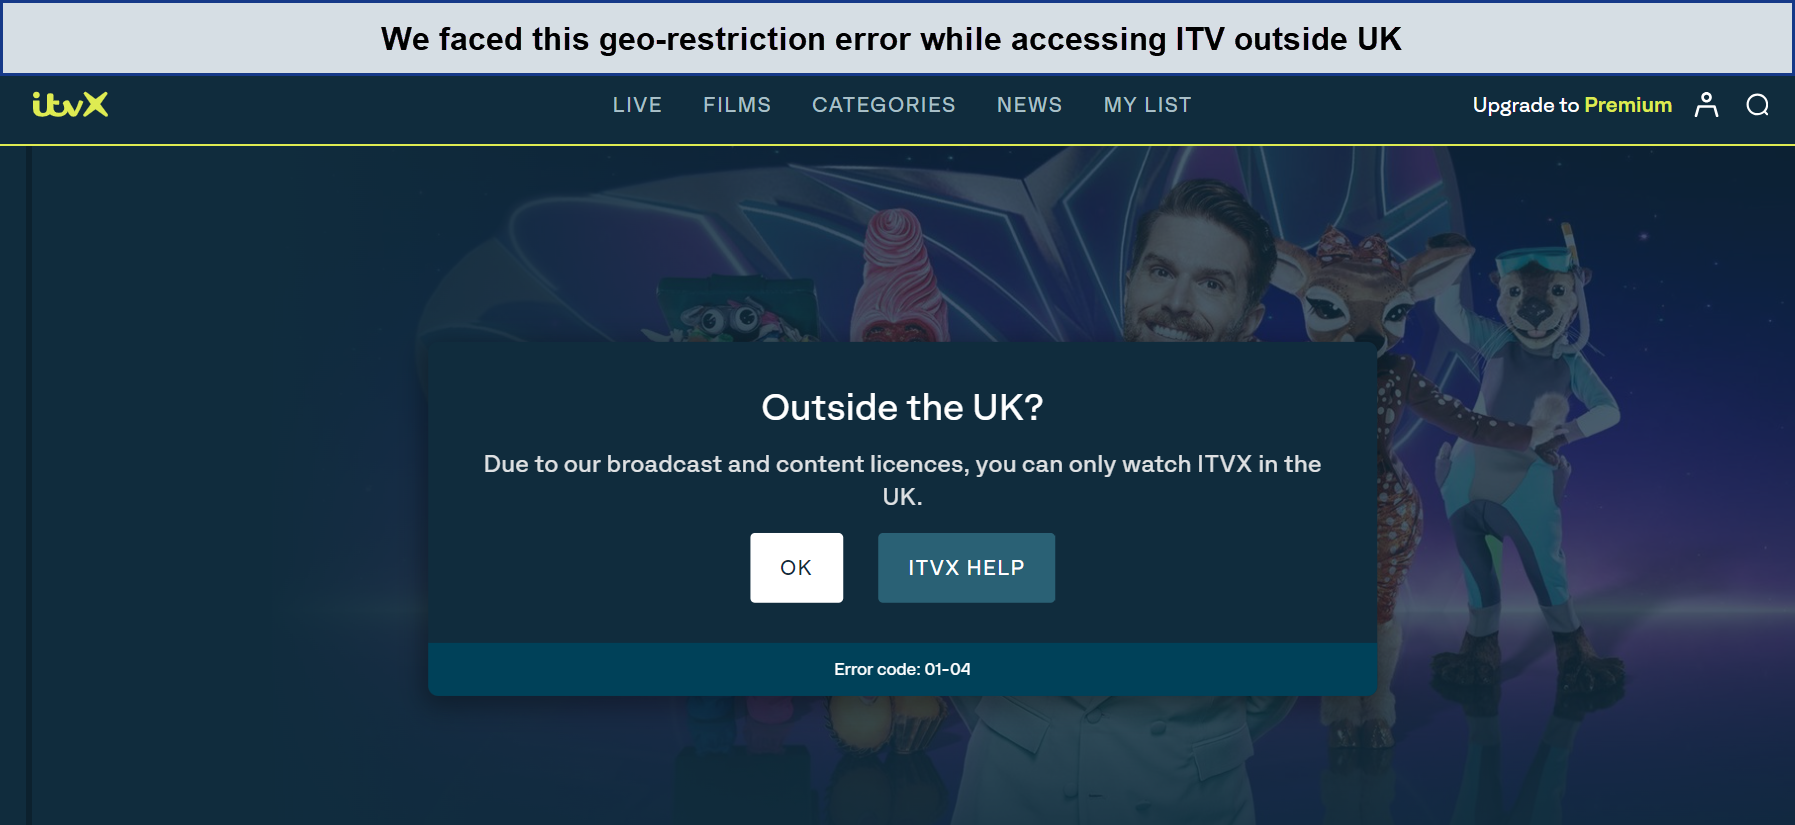 ITV-geo-restriction-error-in-Italy